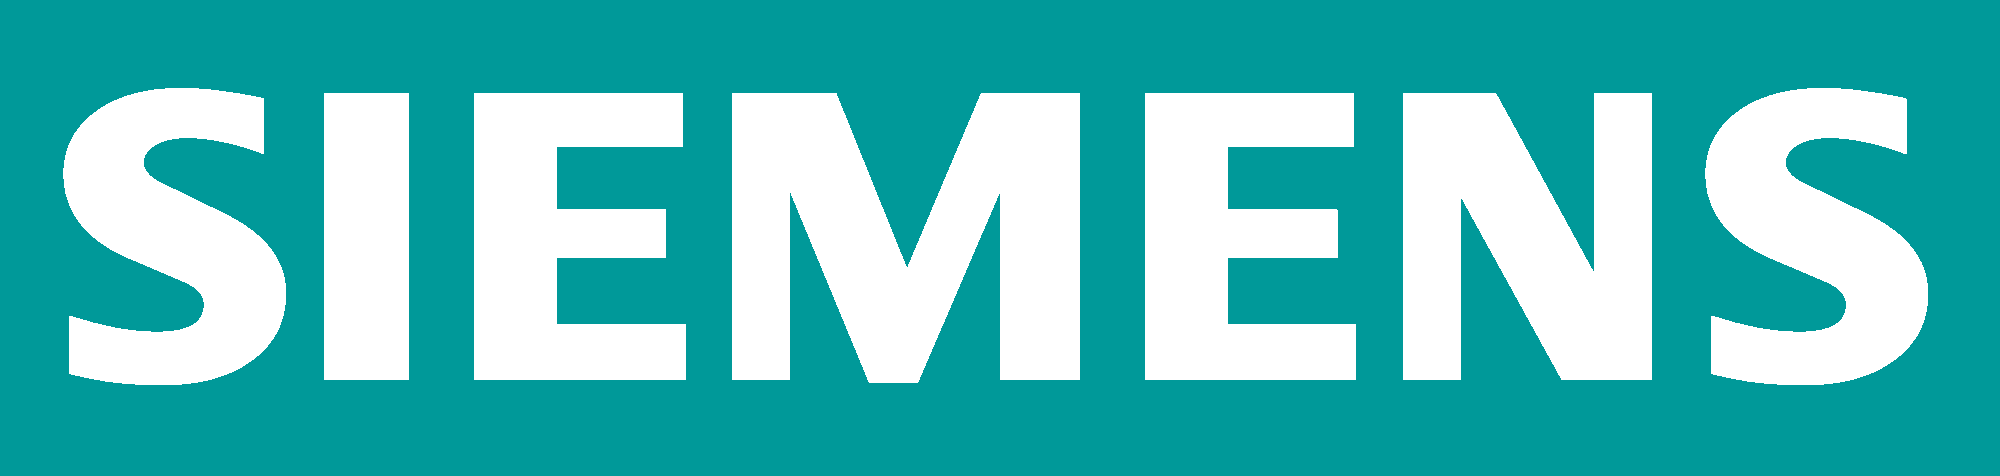 File:Siemens-logo.svg